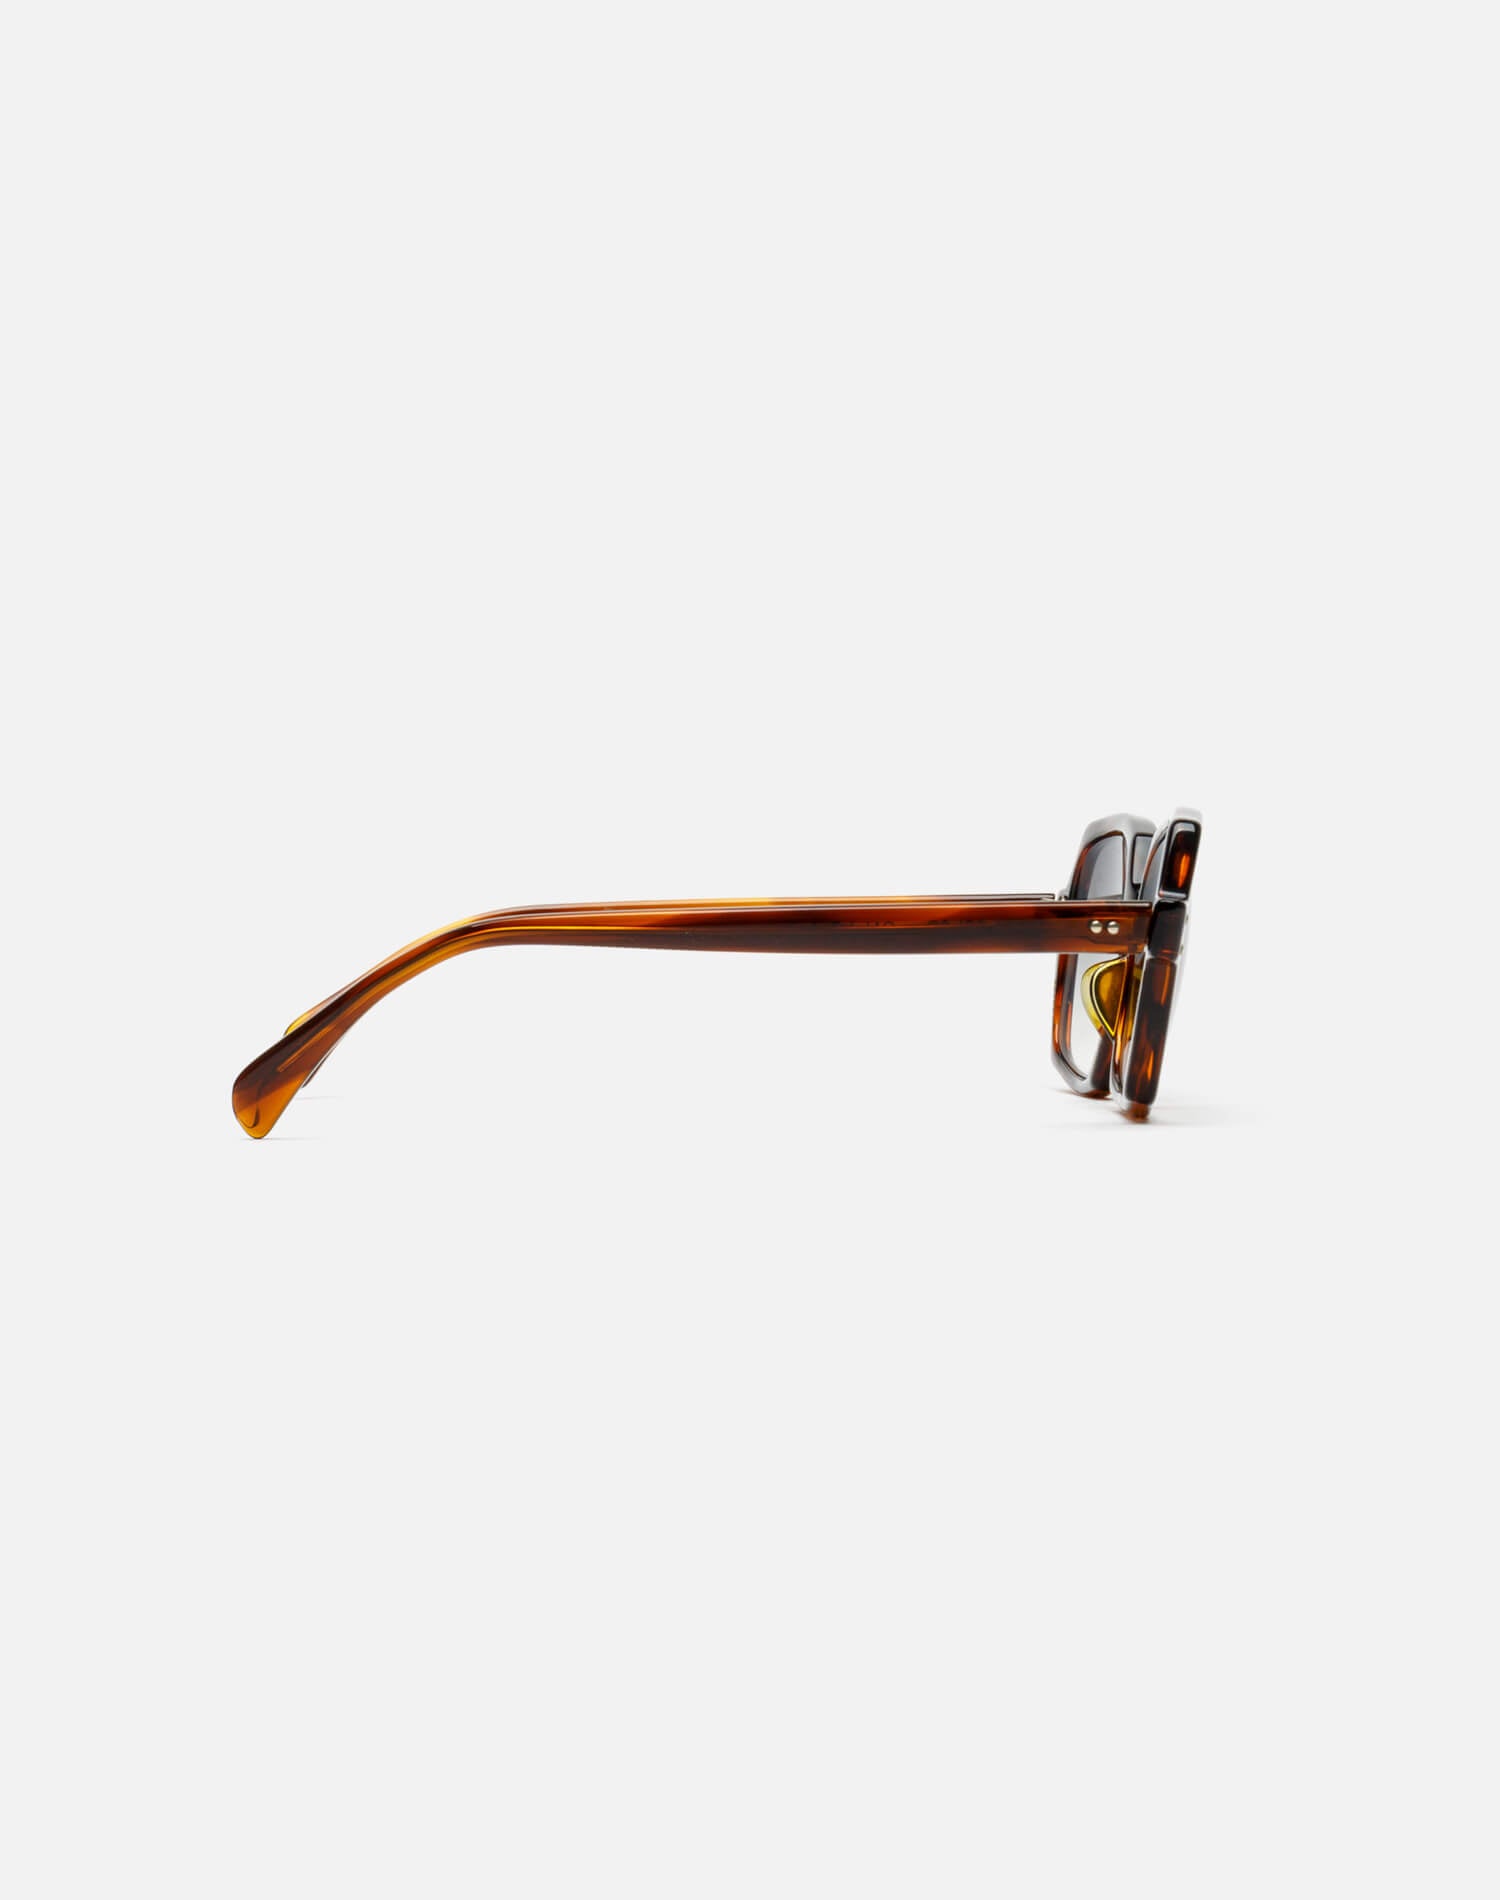 60s American Optical Haunting Sunglasses